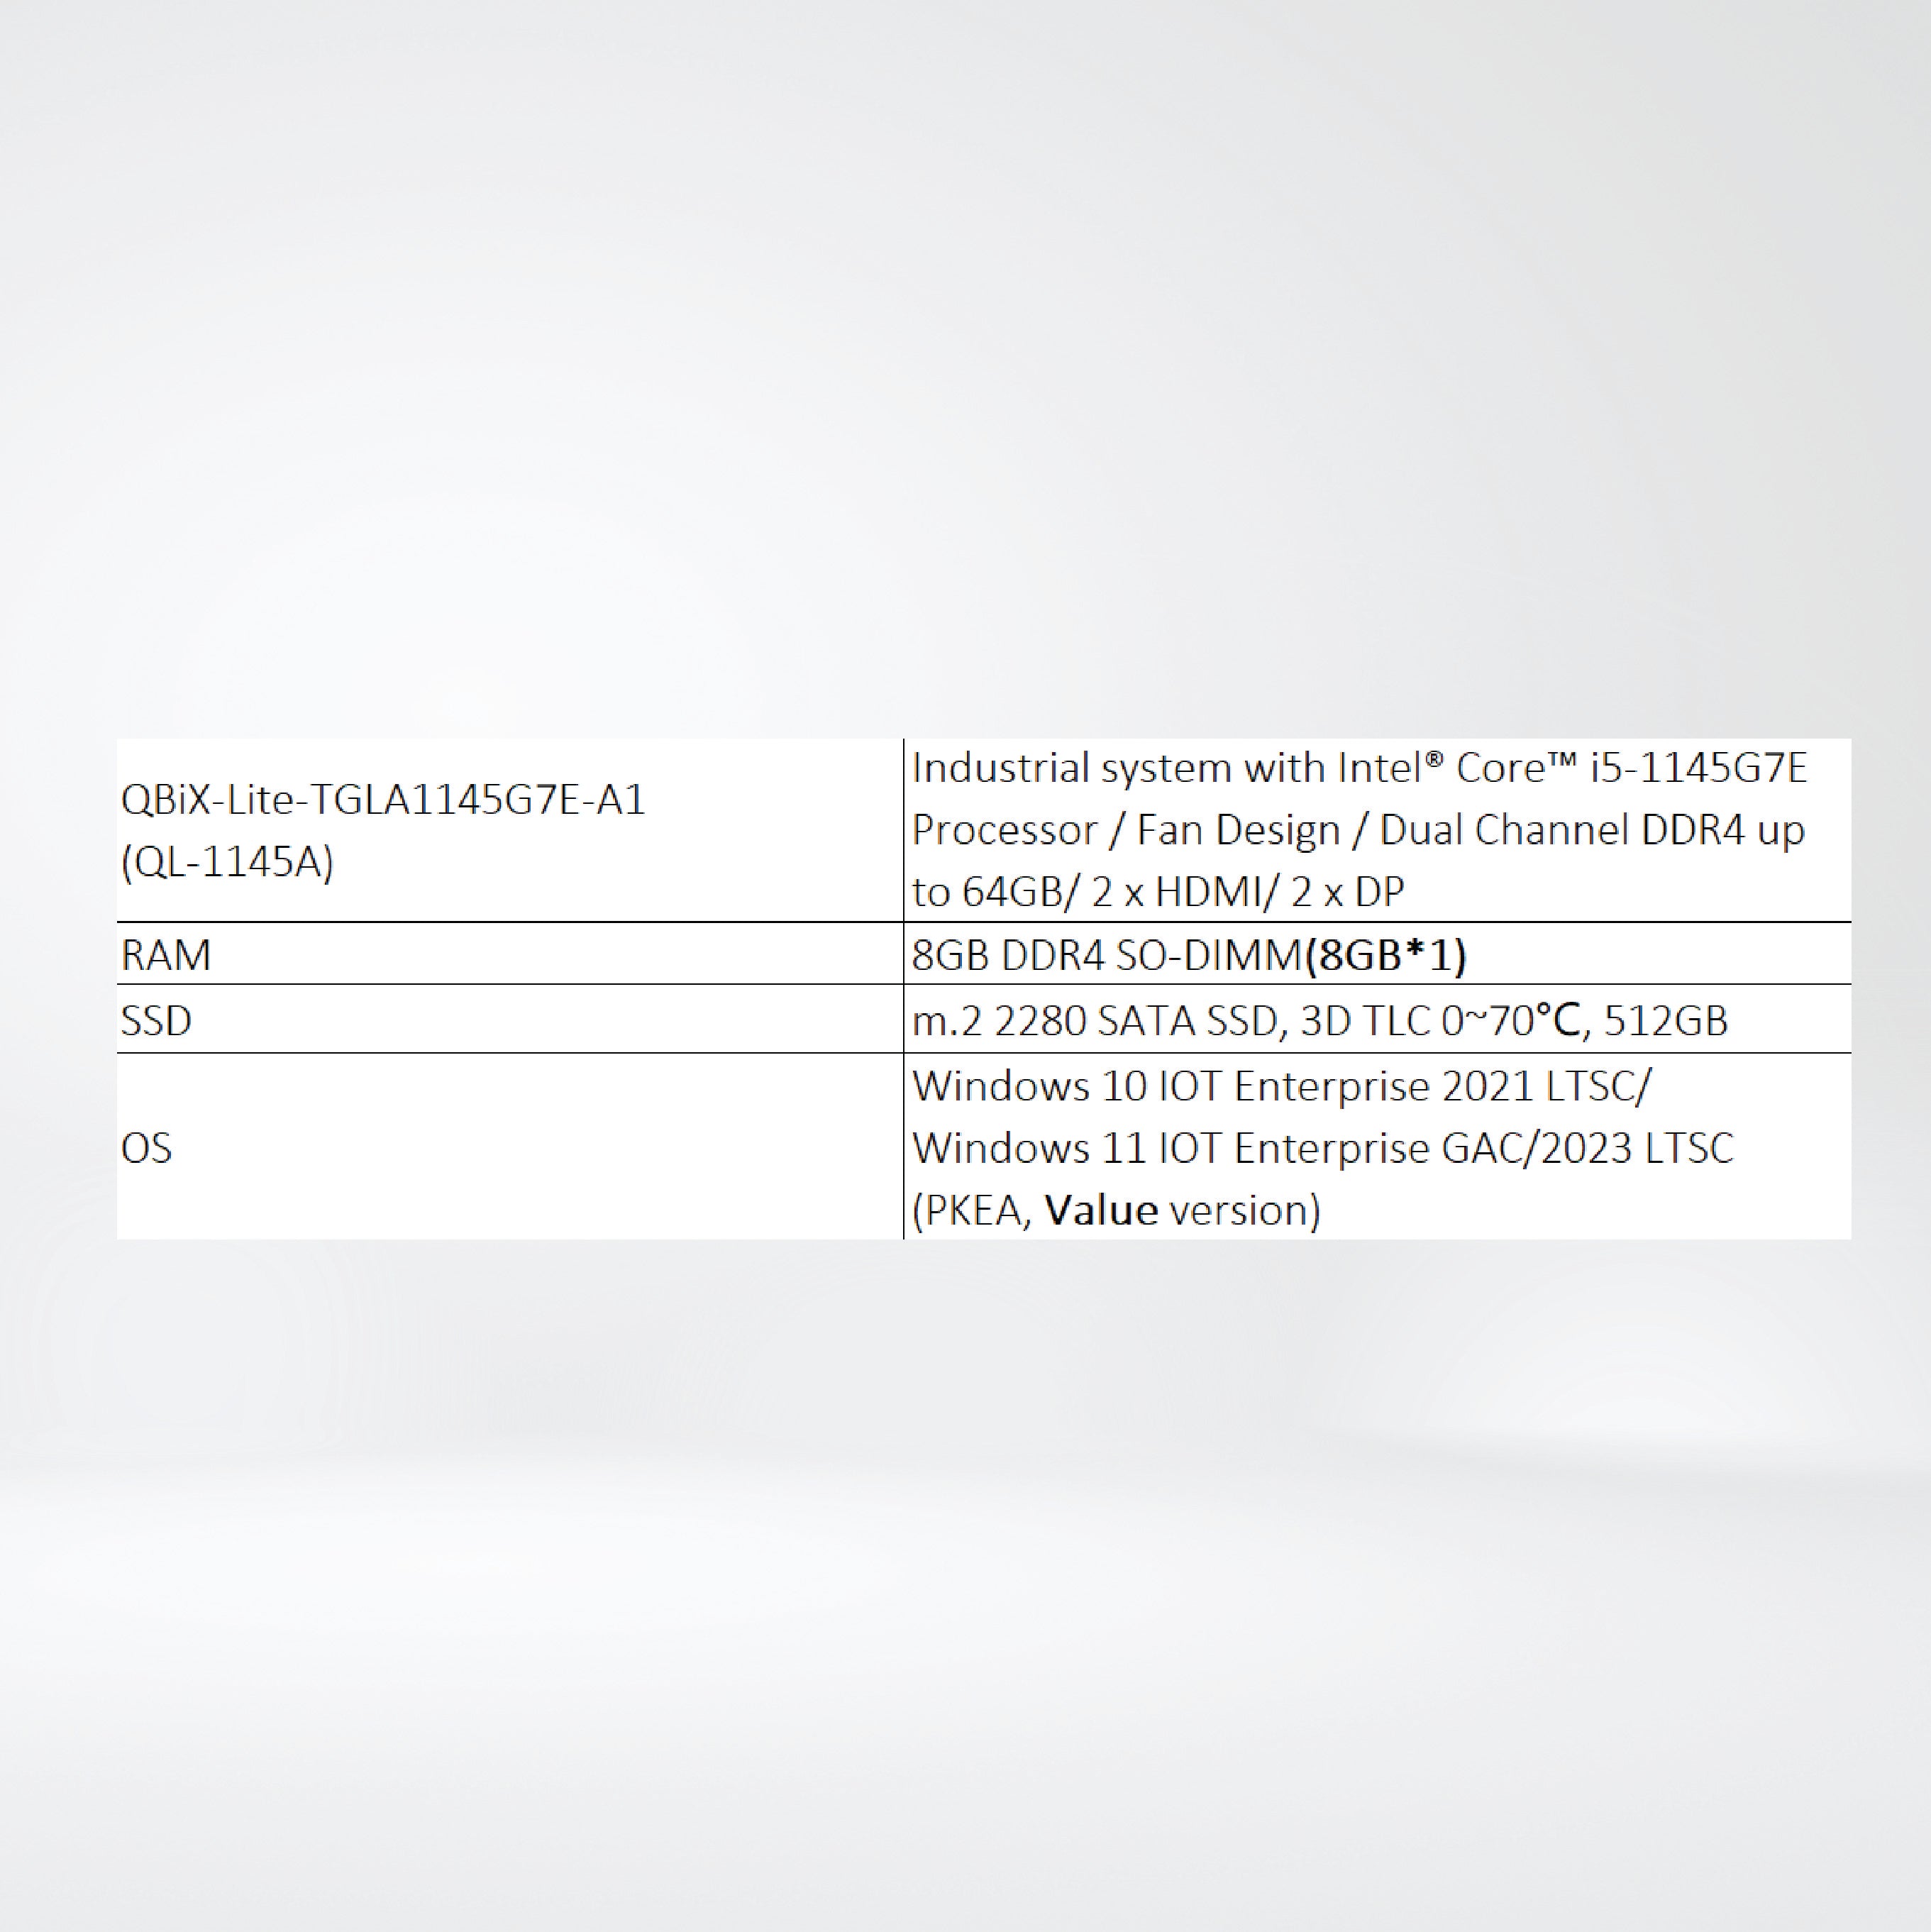 QBiX-Lite-TGLA1145G7E-A1 Industrial system with Intel® Core™ i5-1145G7E Processor